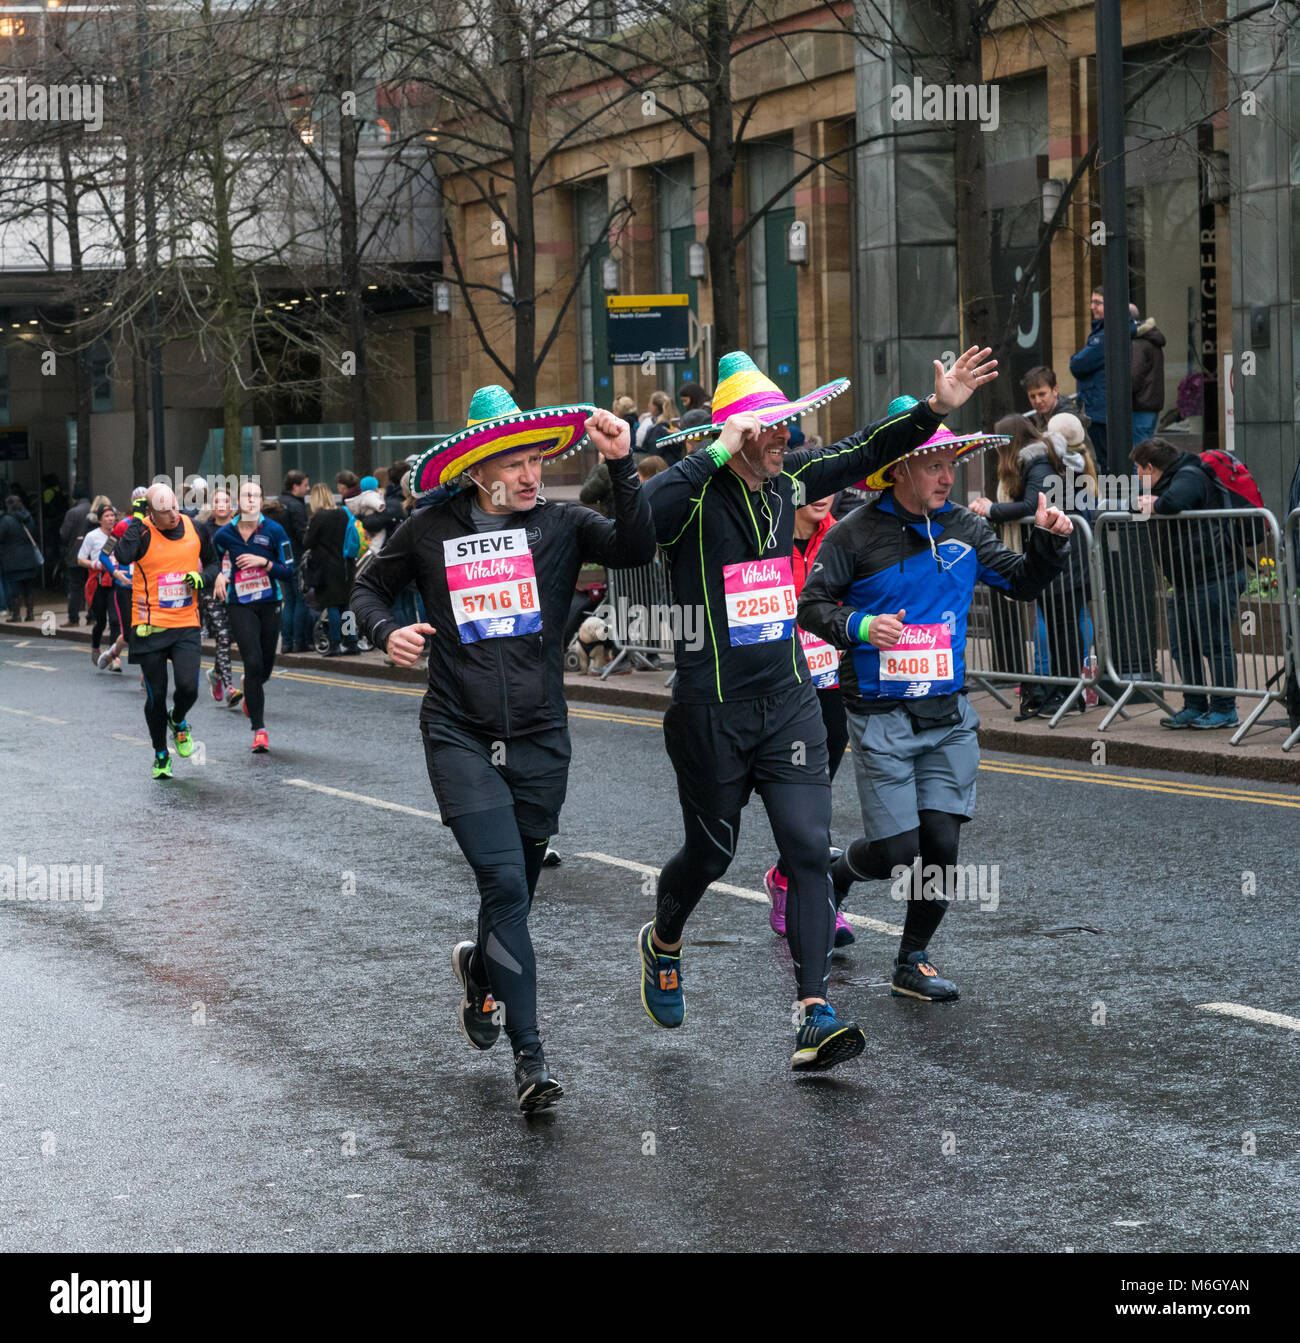 4 March 2018 - London, England. Runners entertaining crowd and enjoying marathon in London. Credit: AndKa/Alamy Live News Stock Photo